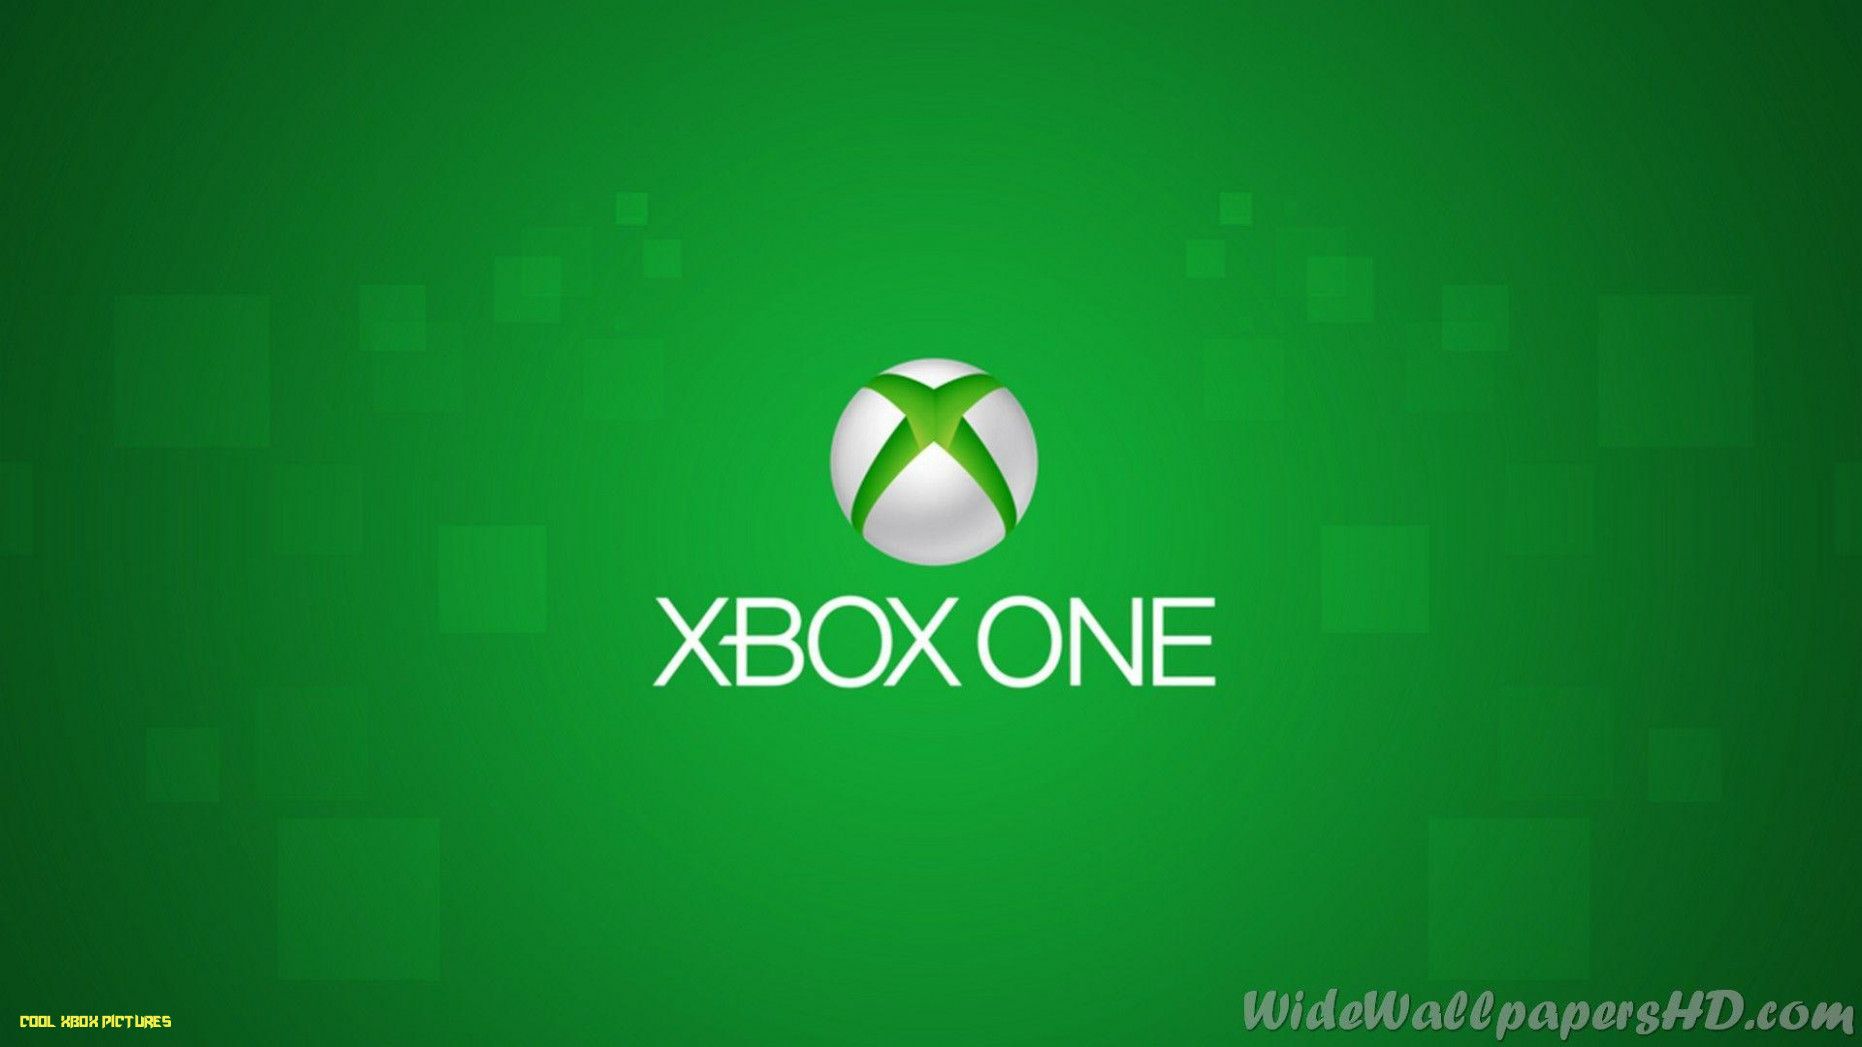 Xbox One X Wallpaper xbox picture